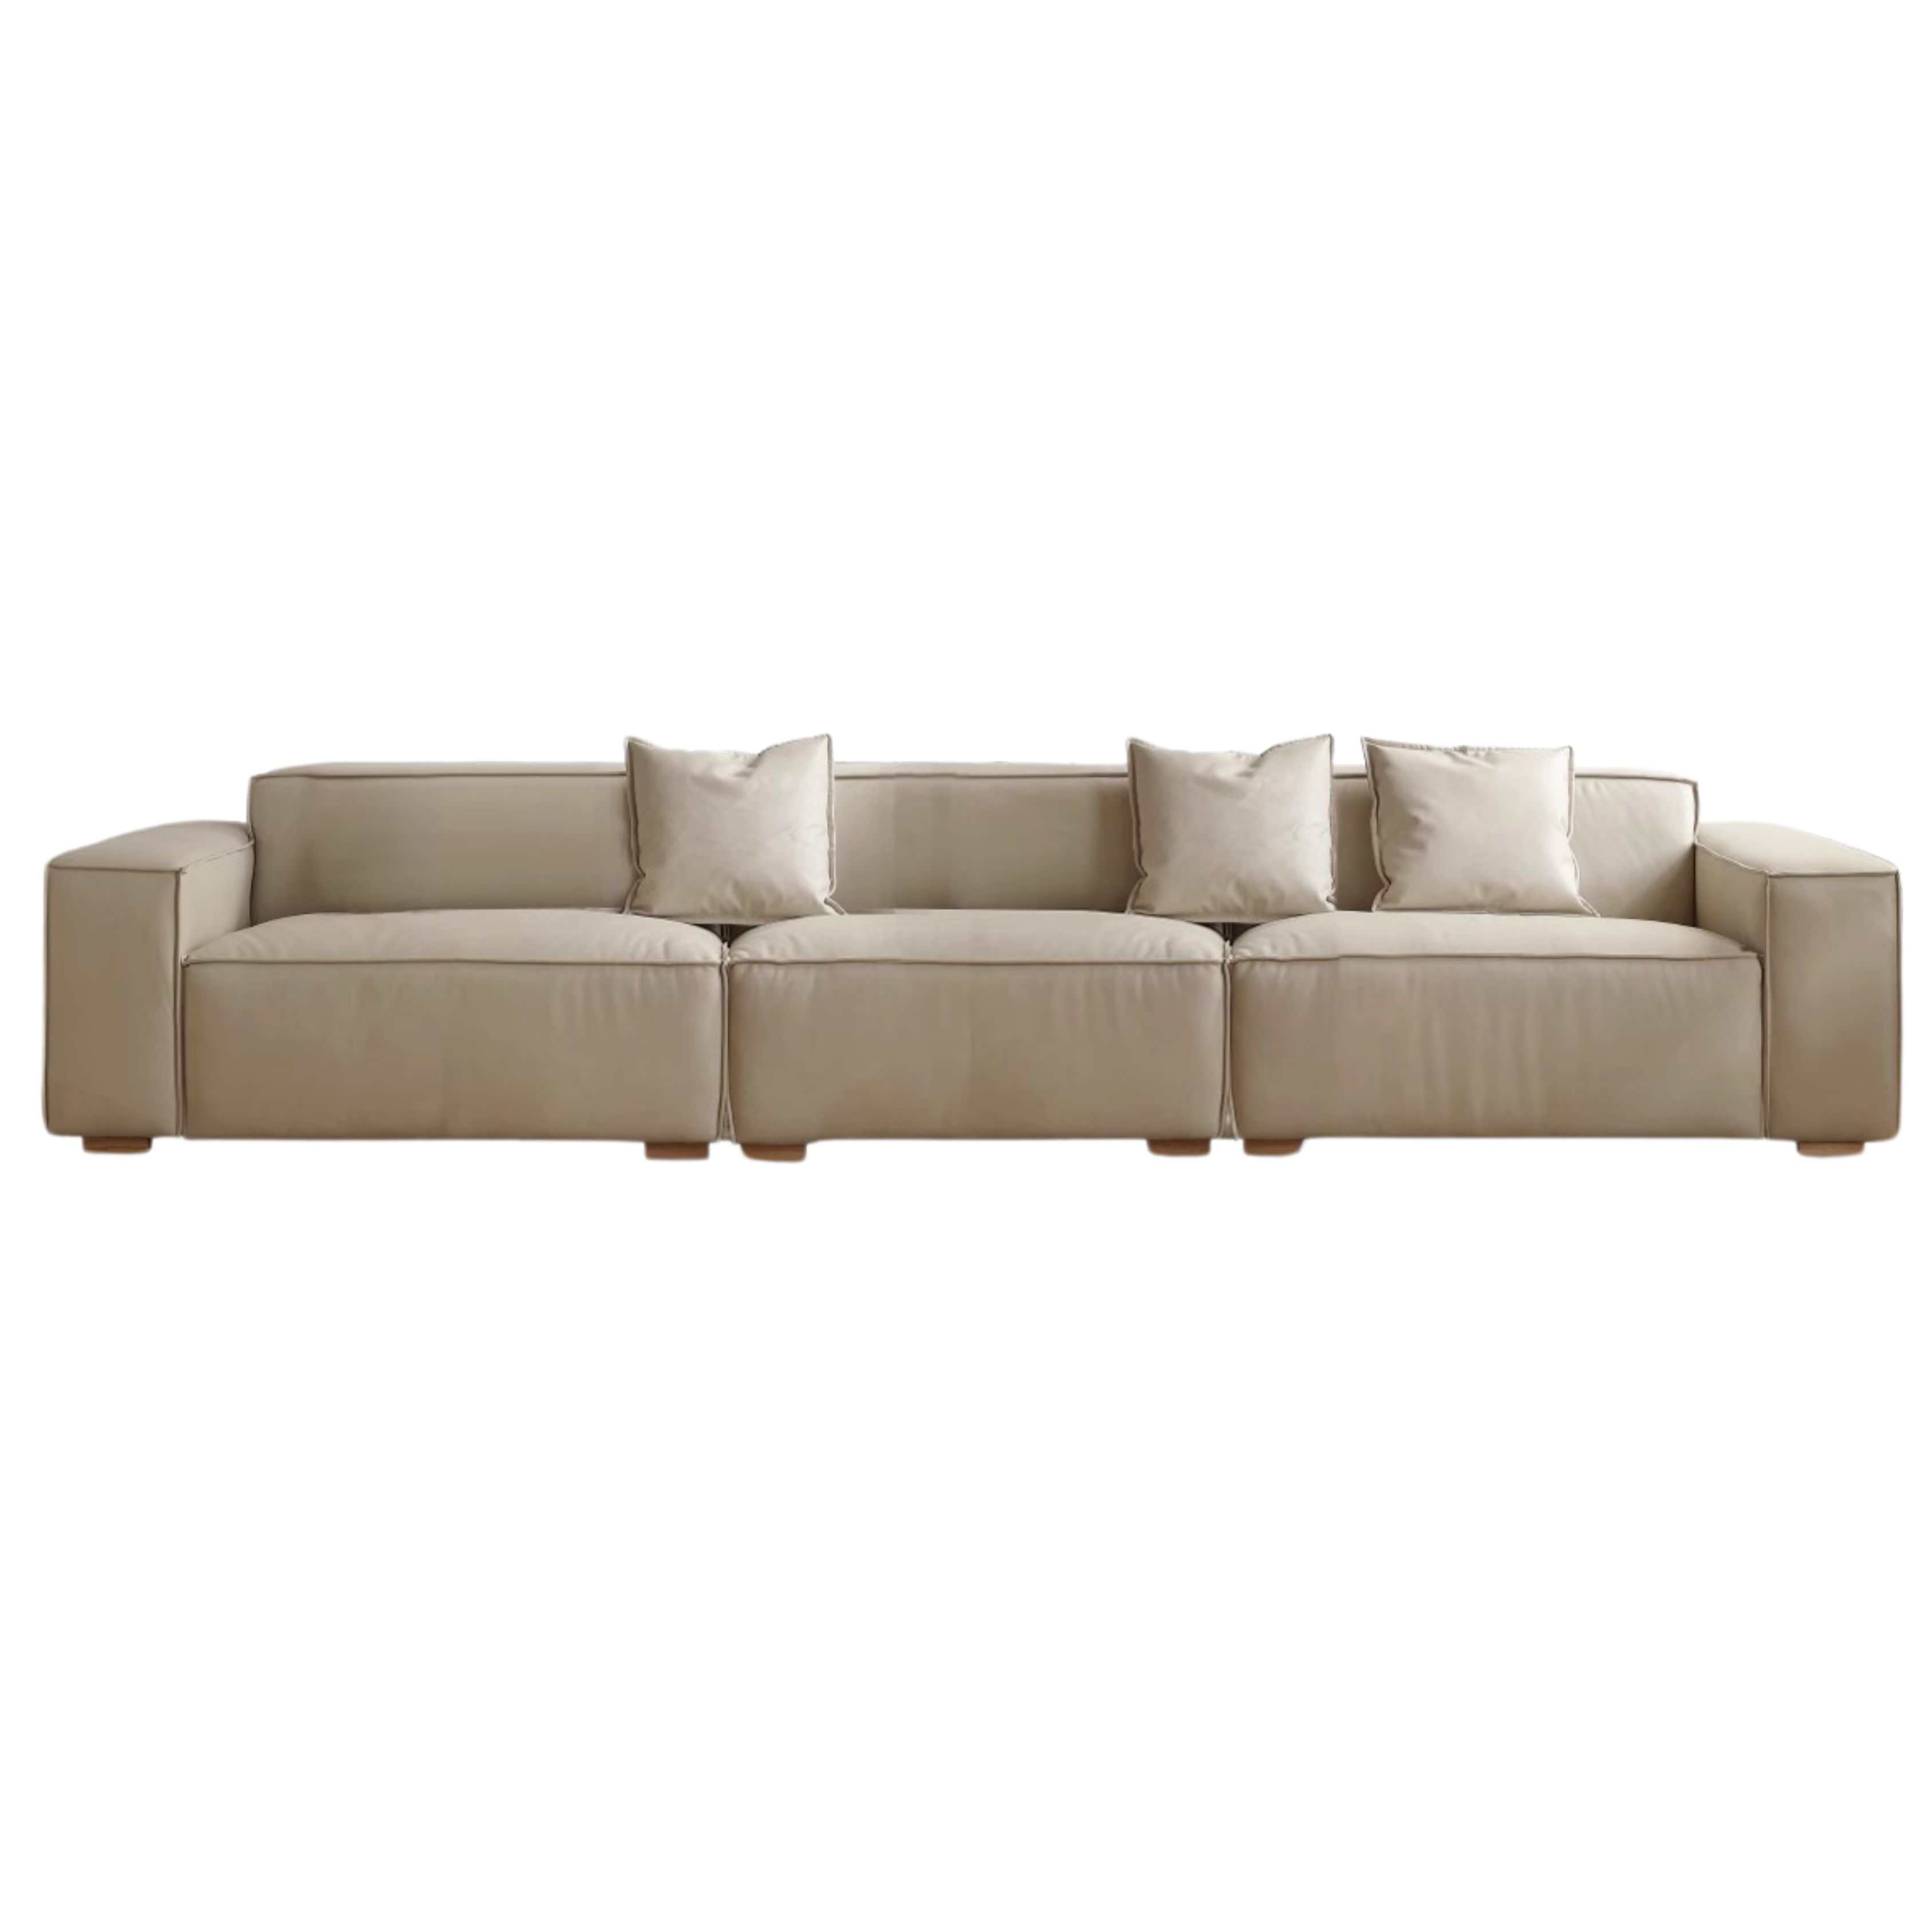 Luxury cow leather sofa, technical fabric sofa)